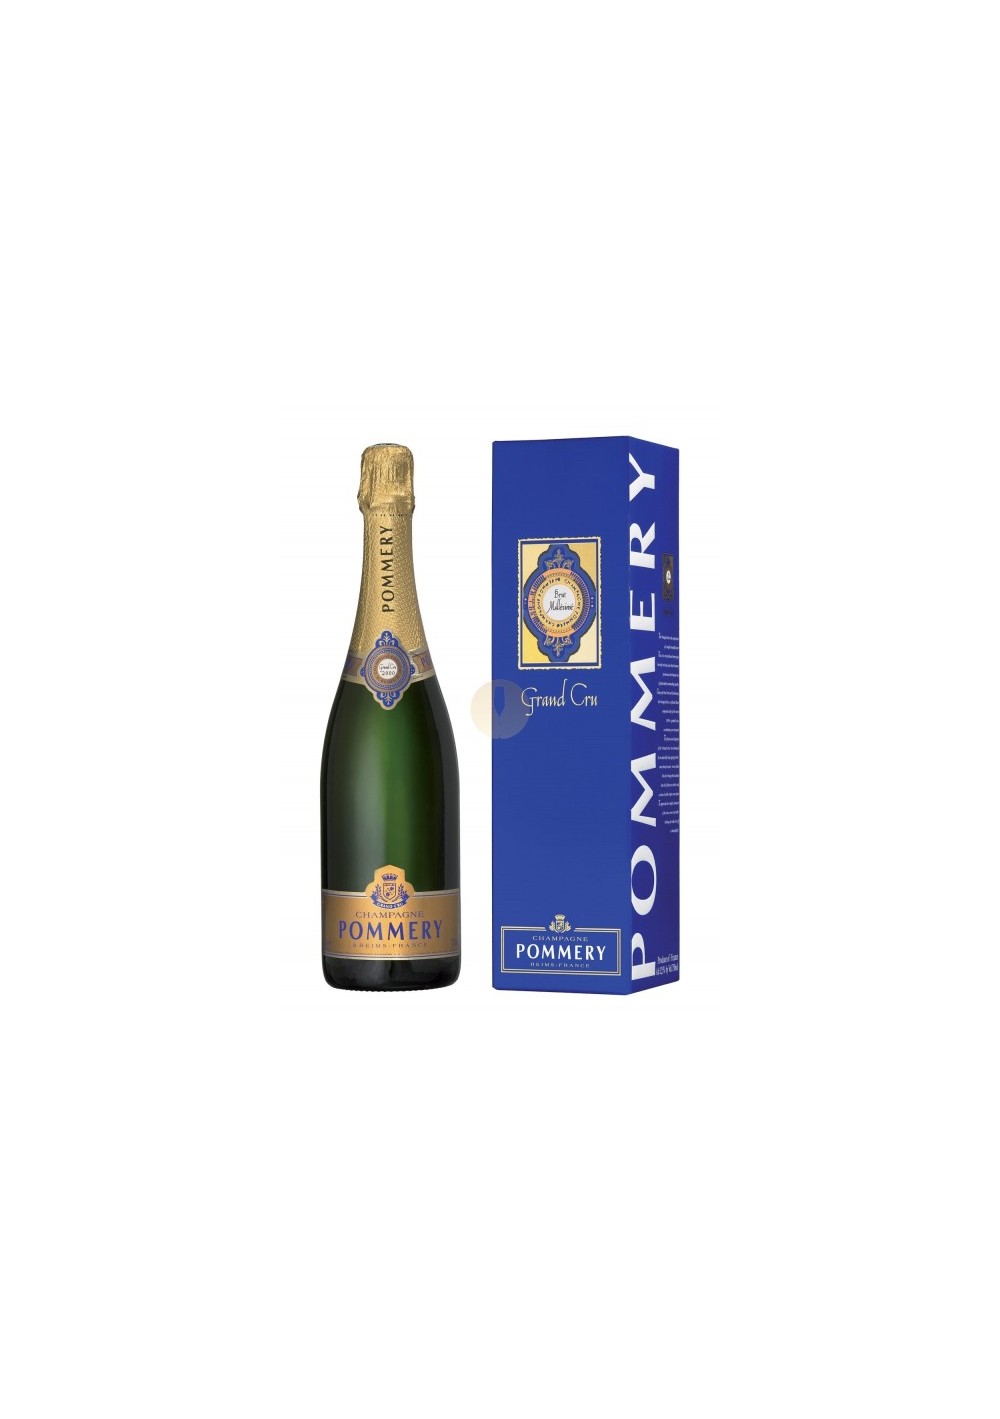 Champagne Pommery Grand Cru 2004 75cl